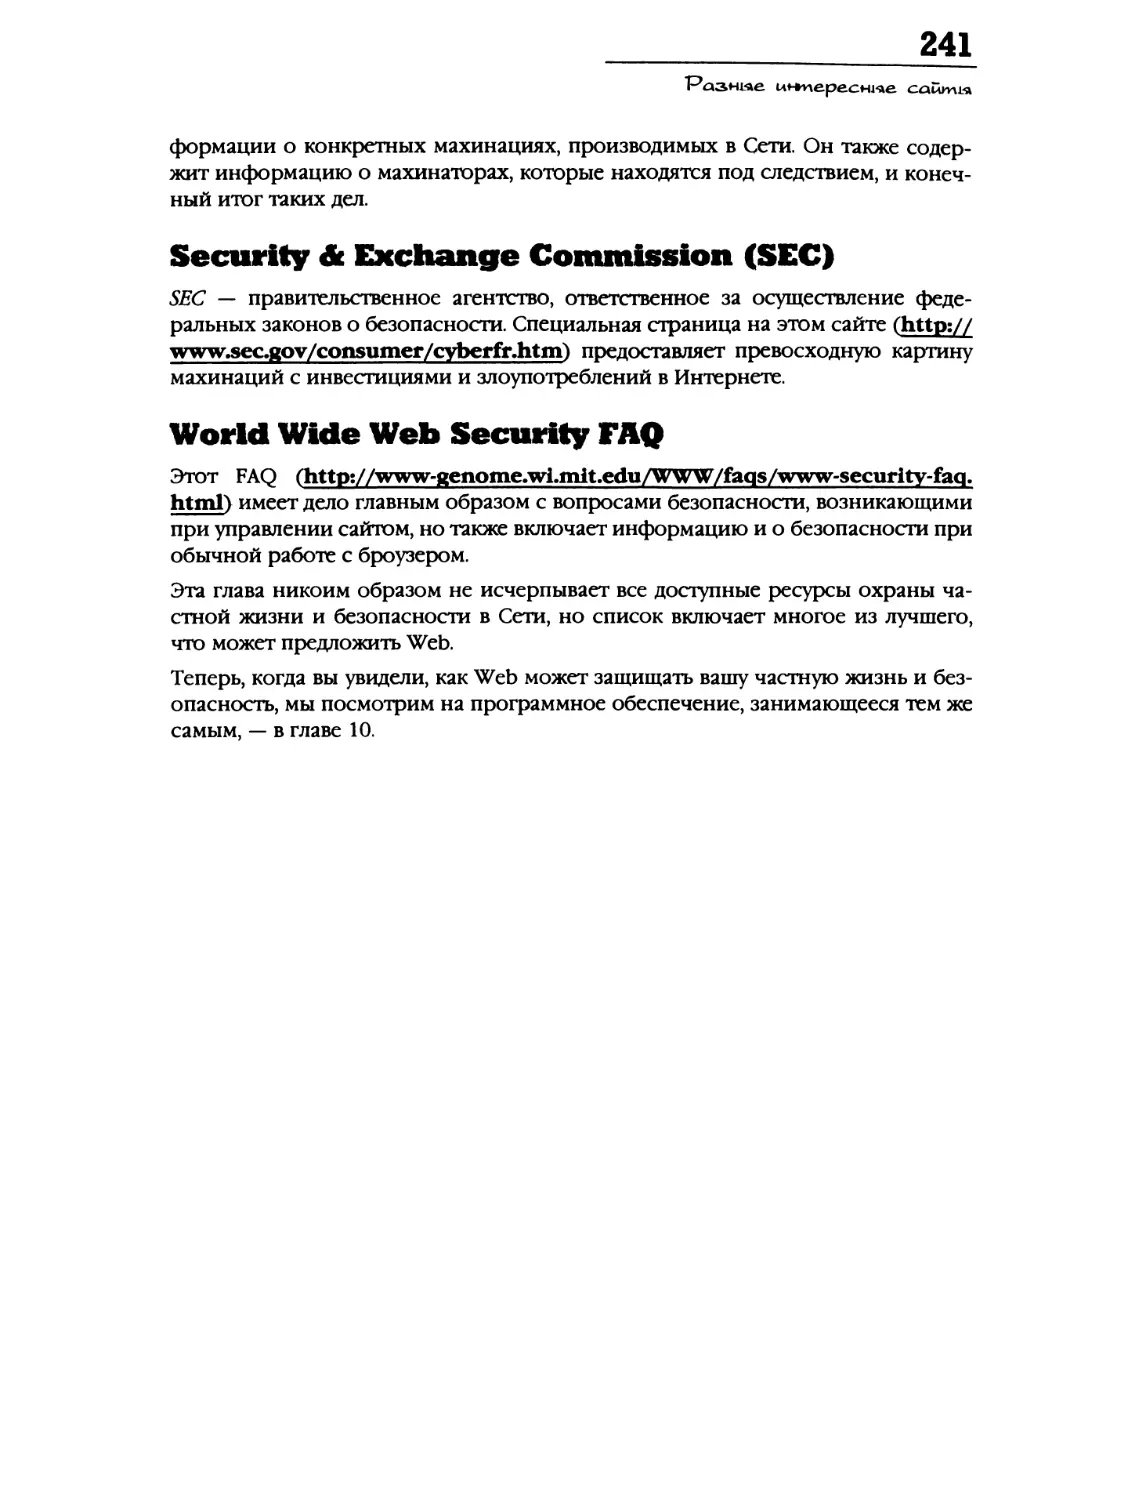 World Wide Web Security FAQ